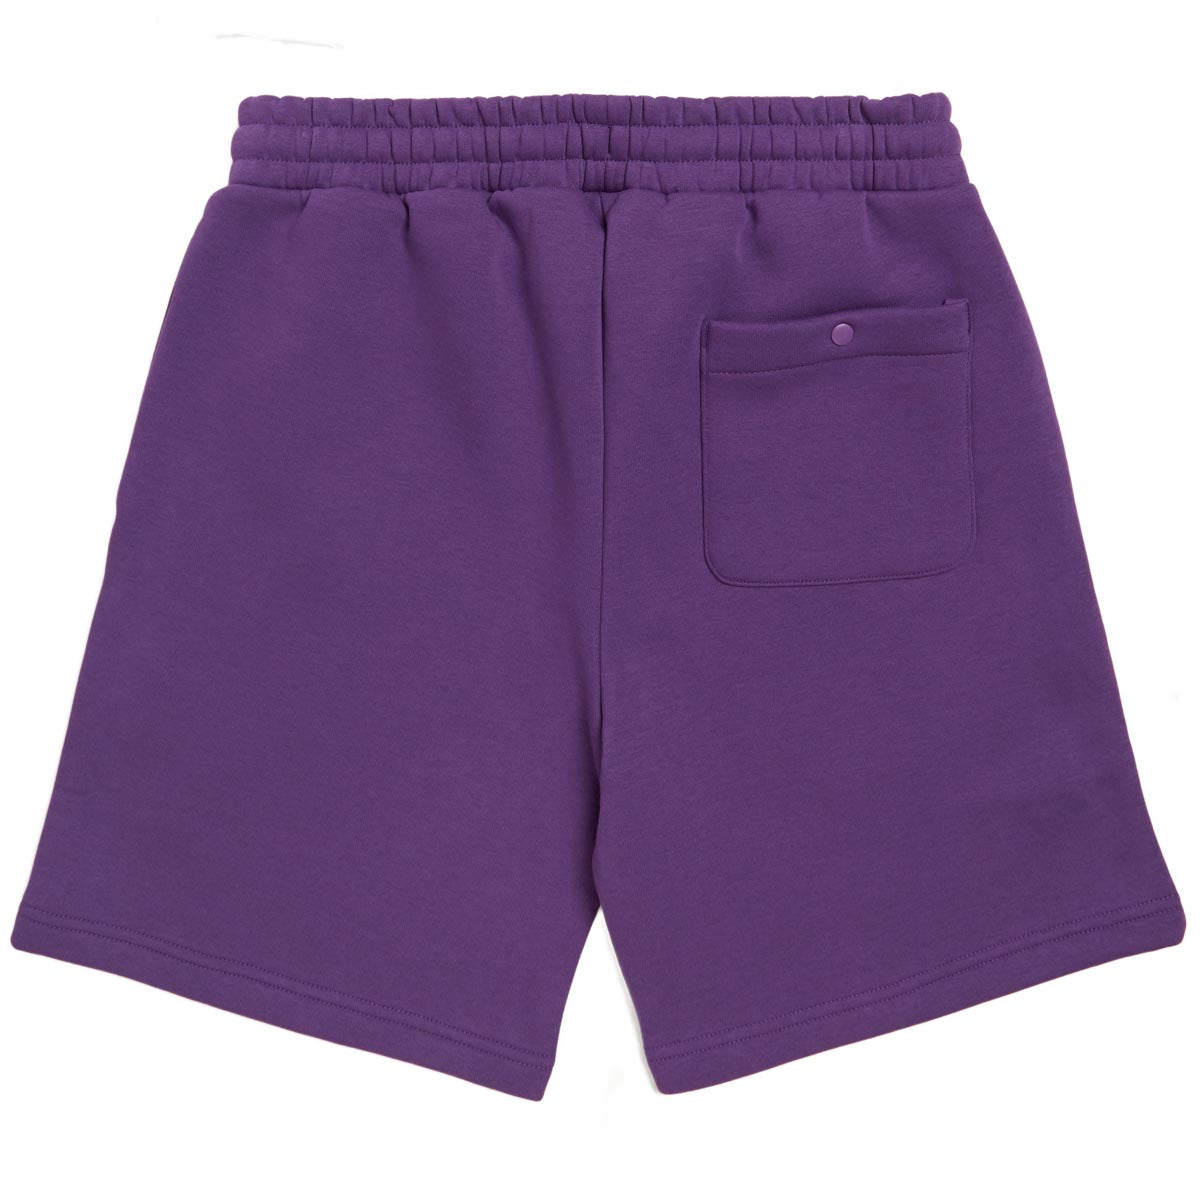 DGK Fire Blossom Fleece Shorts - Purple image 2